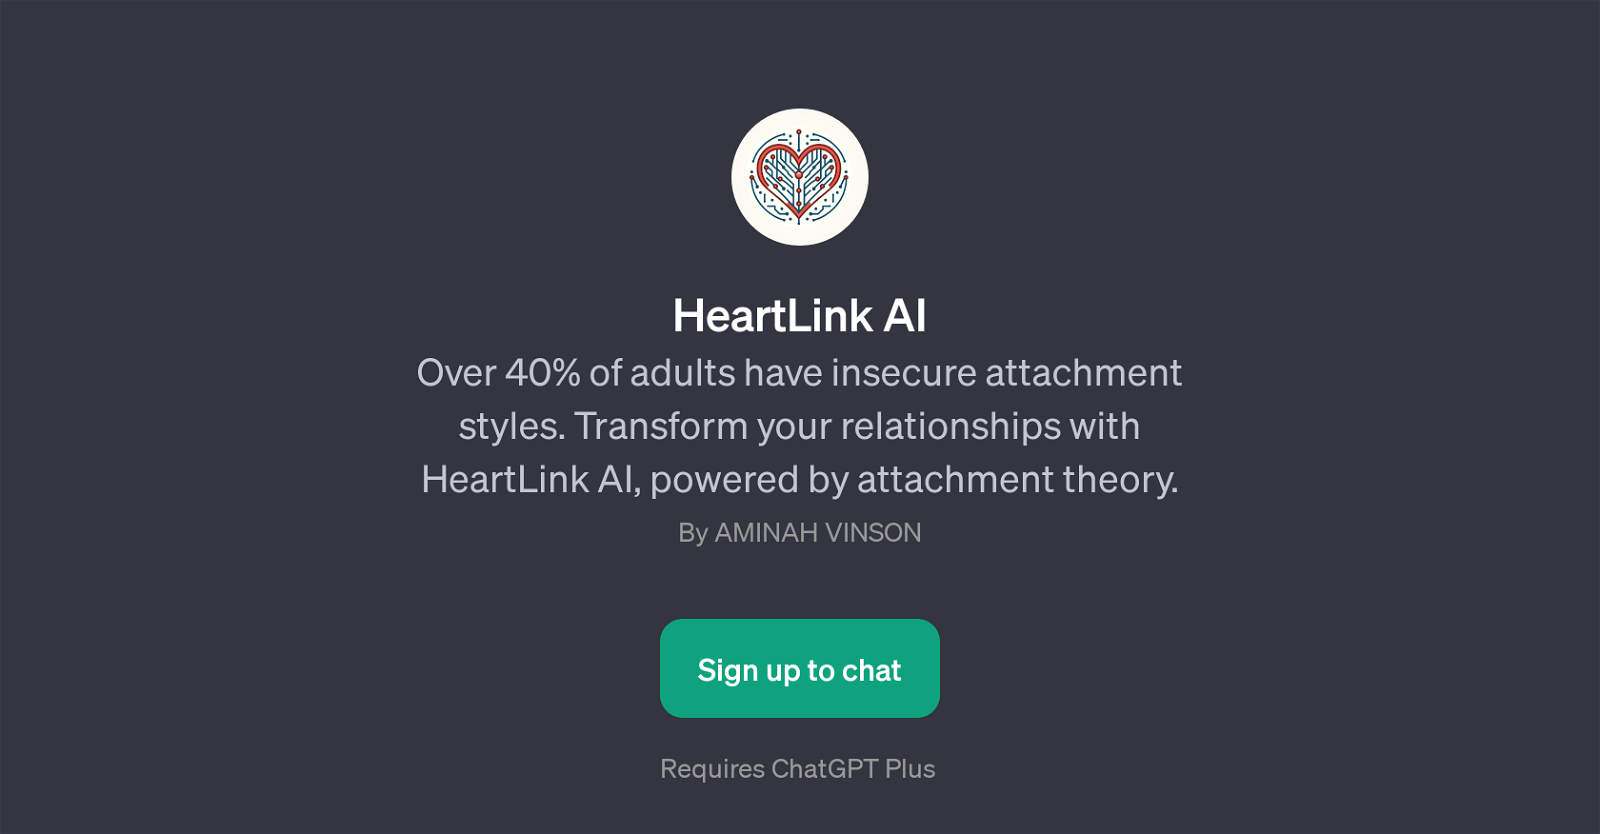 HeartLink AI website